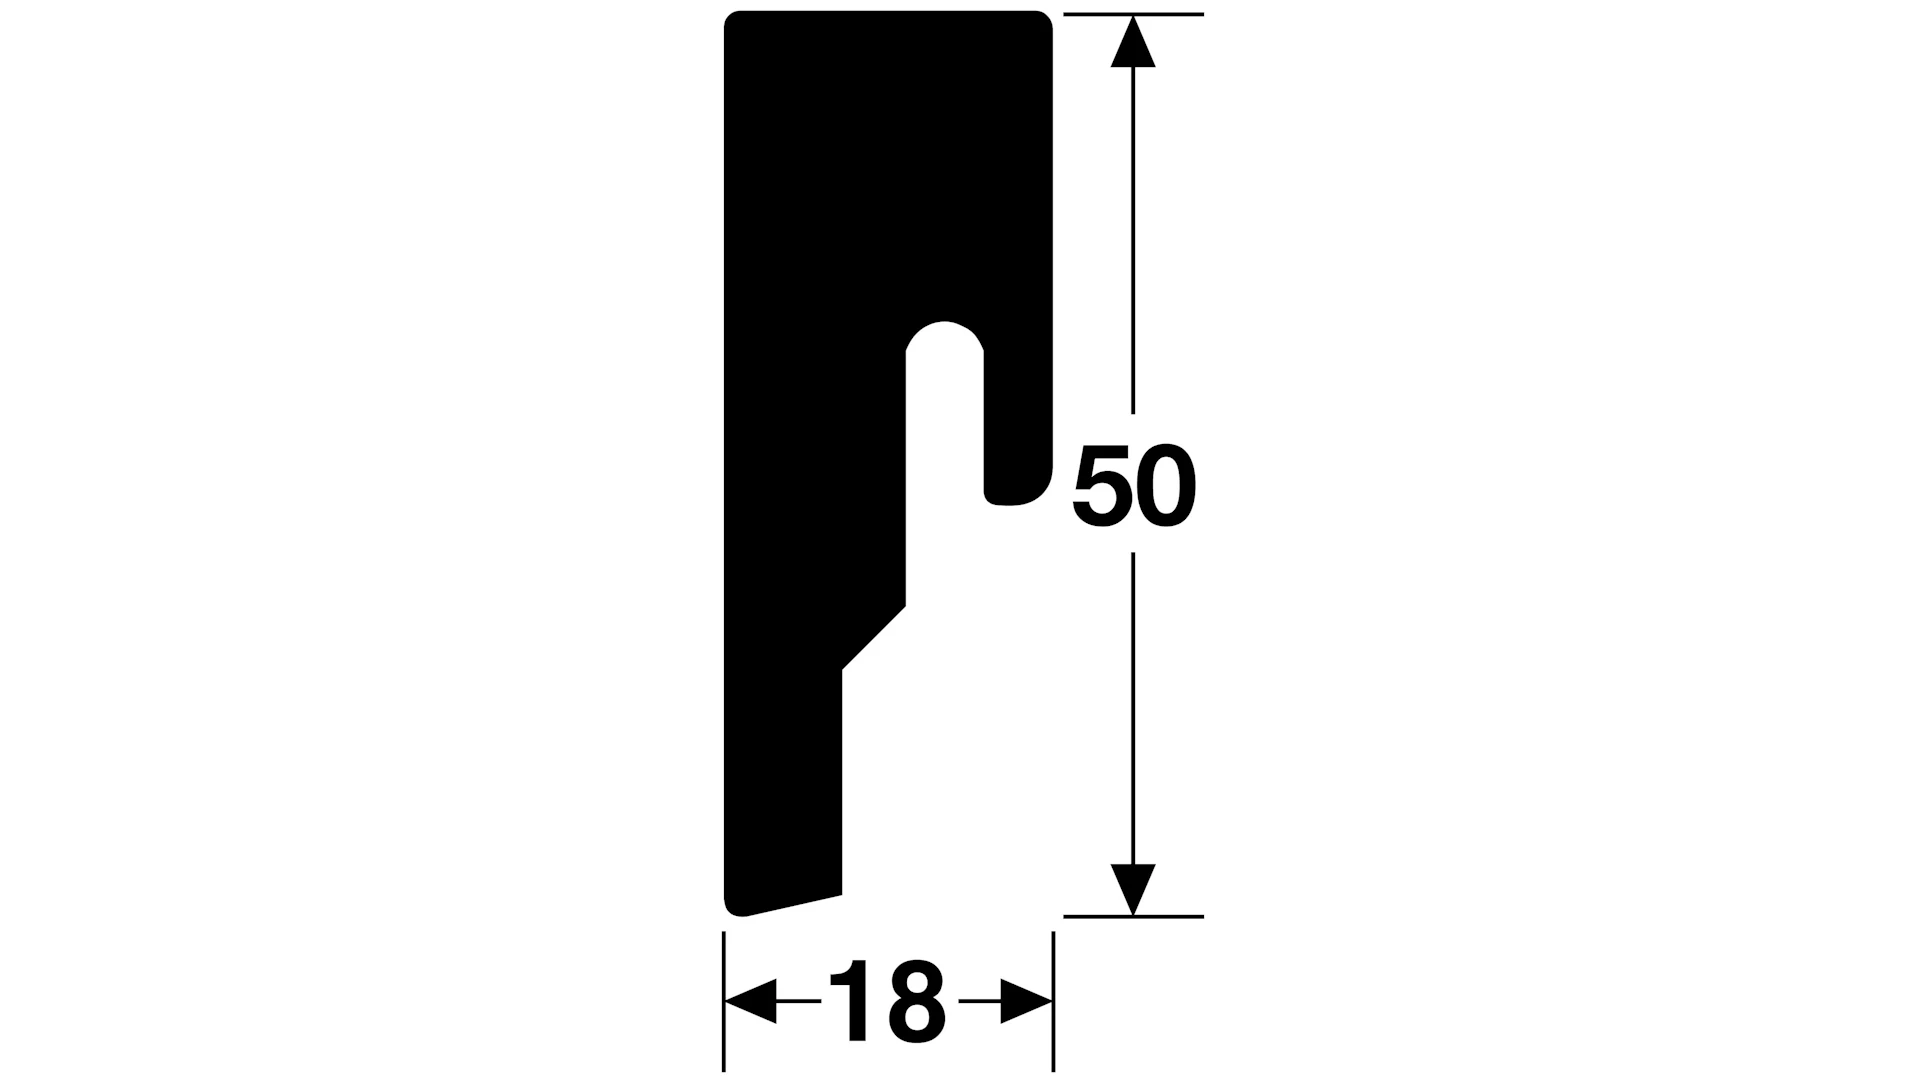 MEISTER Sockelleisten Fußleisten Terrazzo dunkel 6858 - 2380 x 50 x 18 mm (200015-2380-06858)